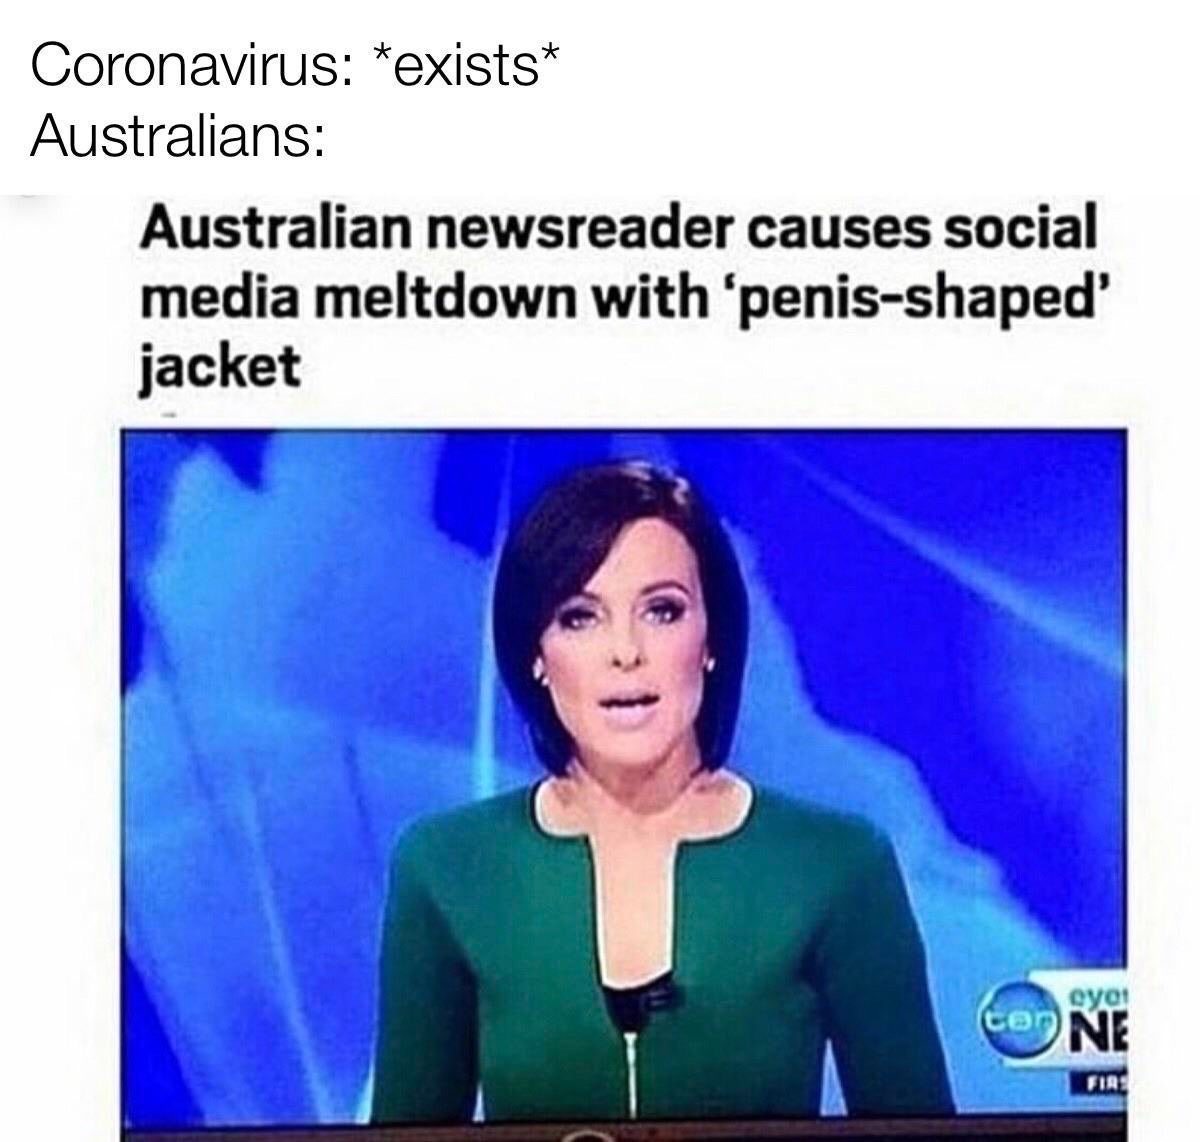 australian news presenter jacket penis - Coronavirus exists Australians Australian newsreader causes social media meltdown with 'penisshaped jacket oyot Cone Fire